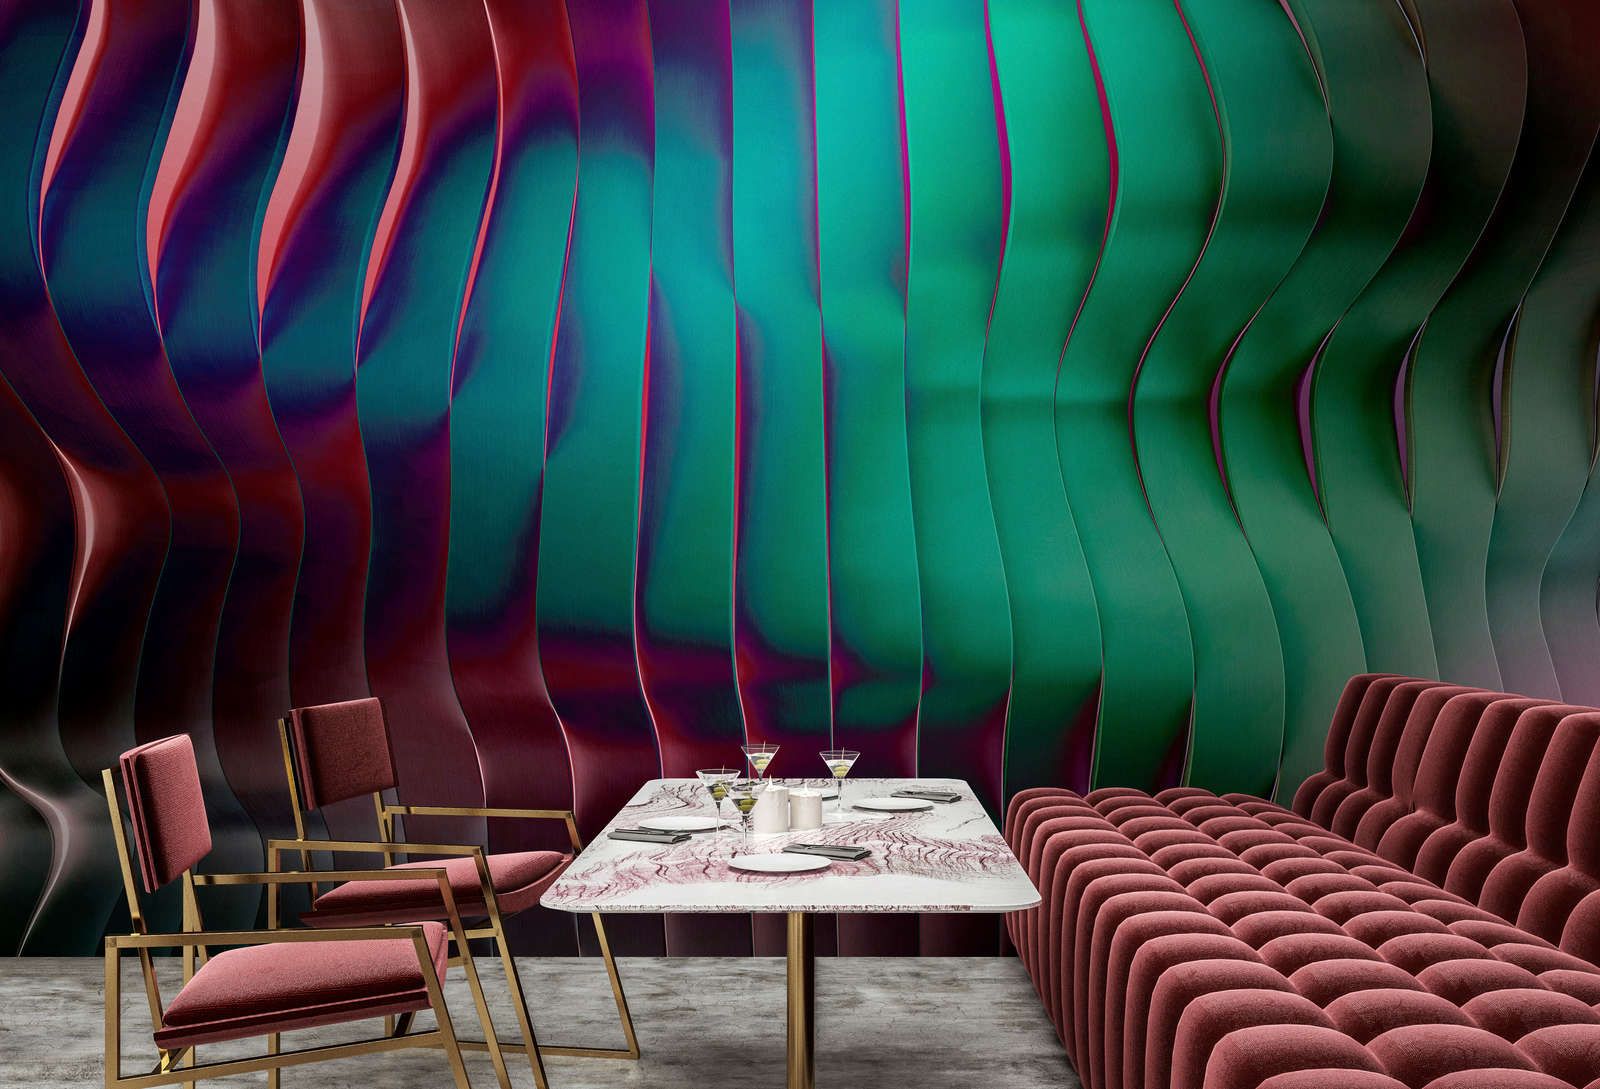             solaris 2 - Papel pintado fotográfico moderno con arquitectura ondulada - colores neón | tejido sin tejer mate, liso
        